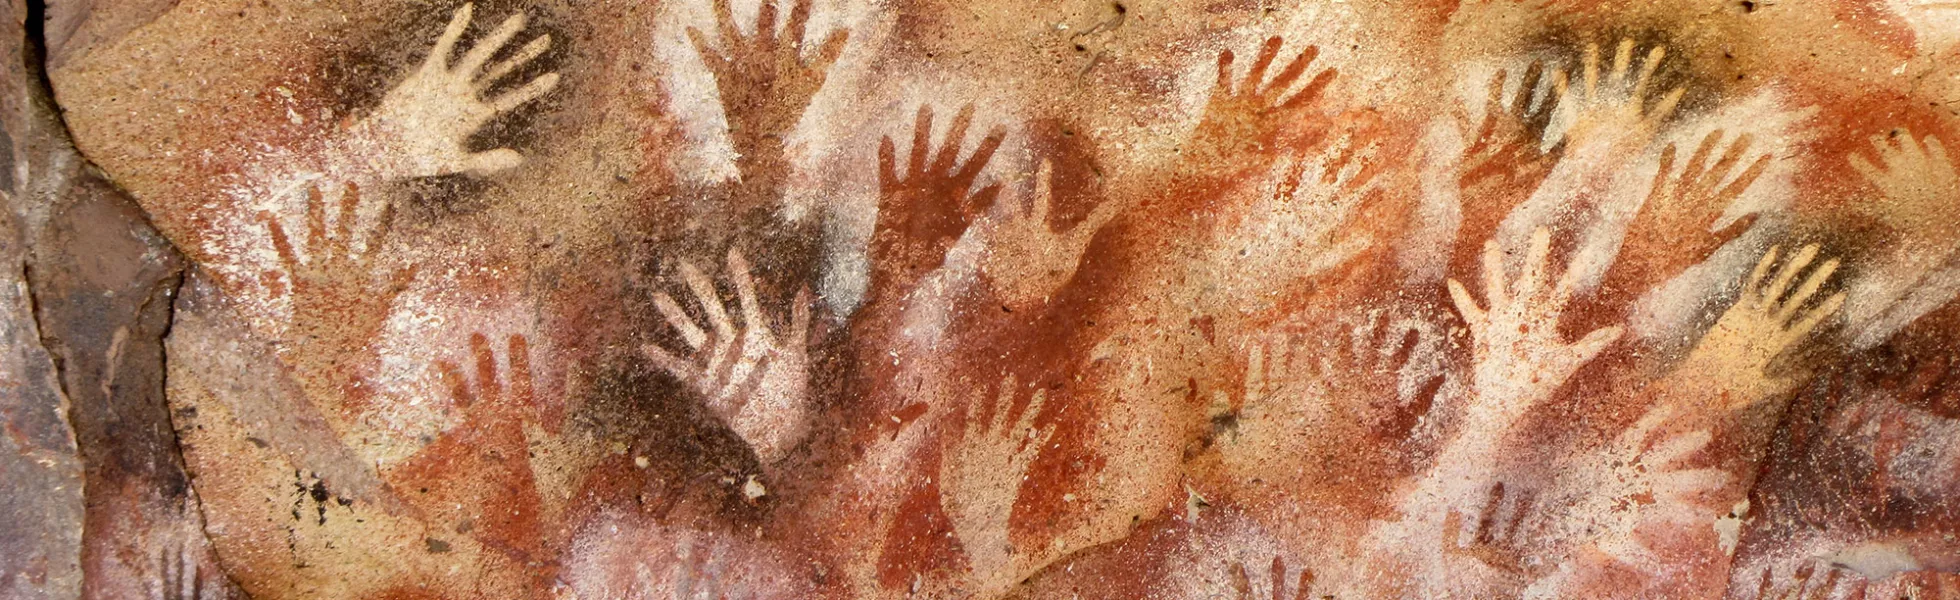 anthropology banner hands